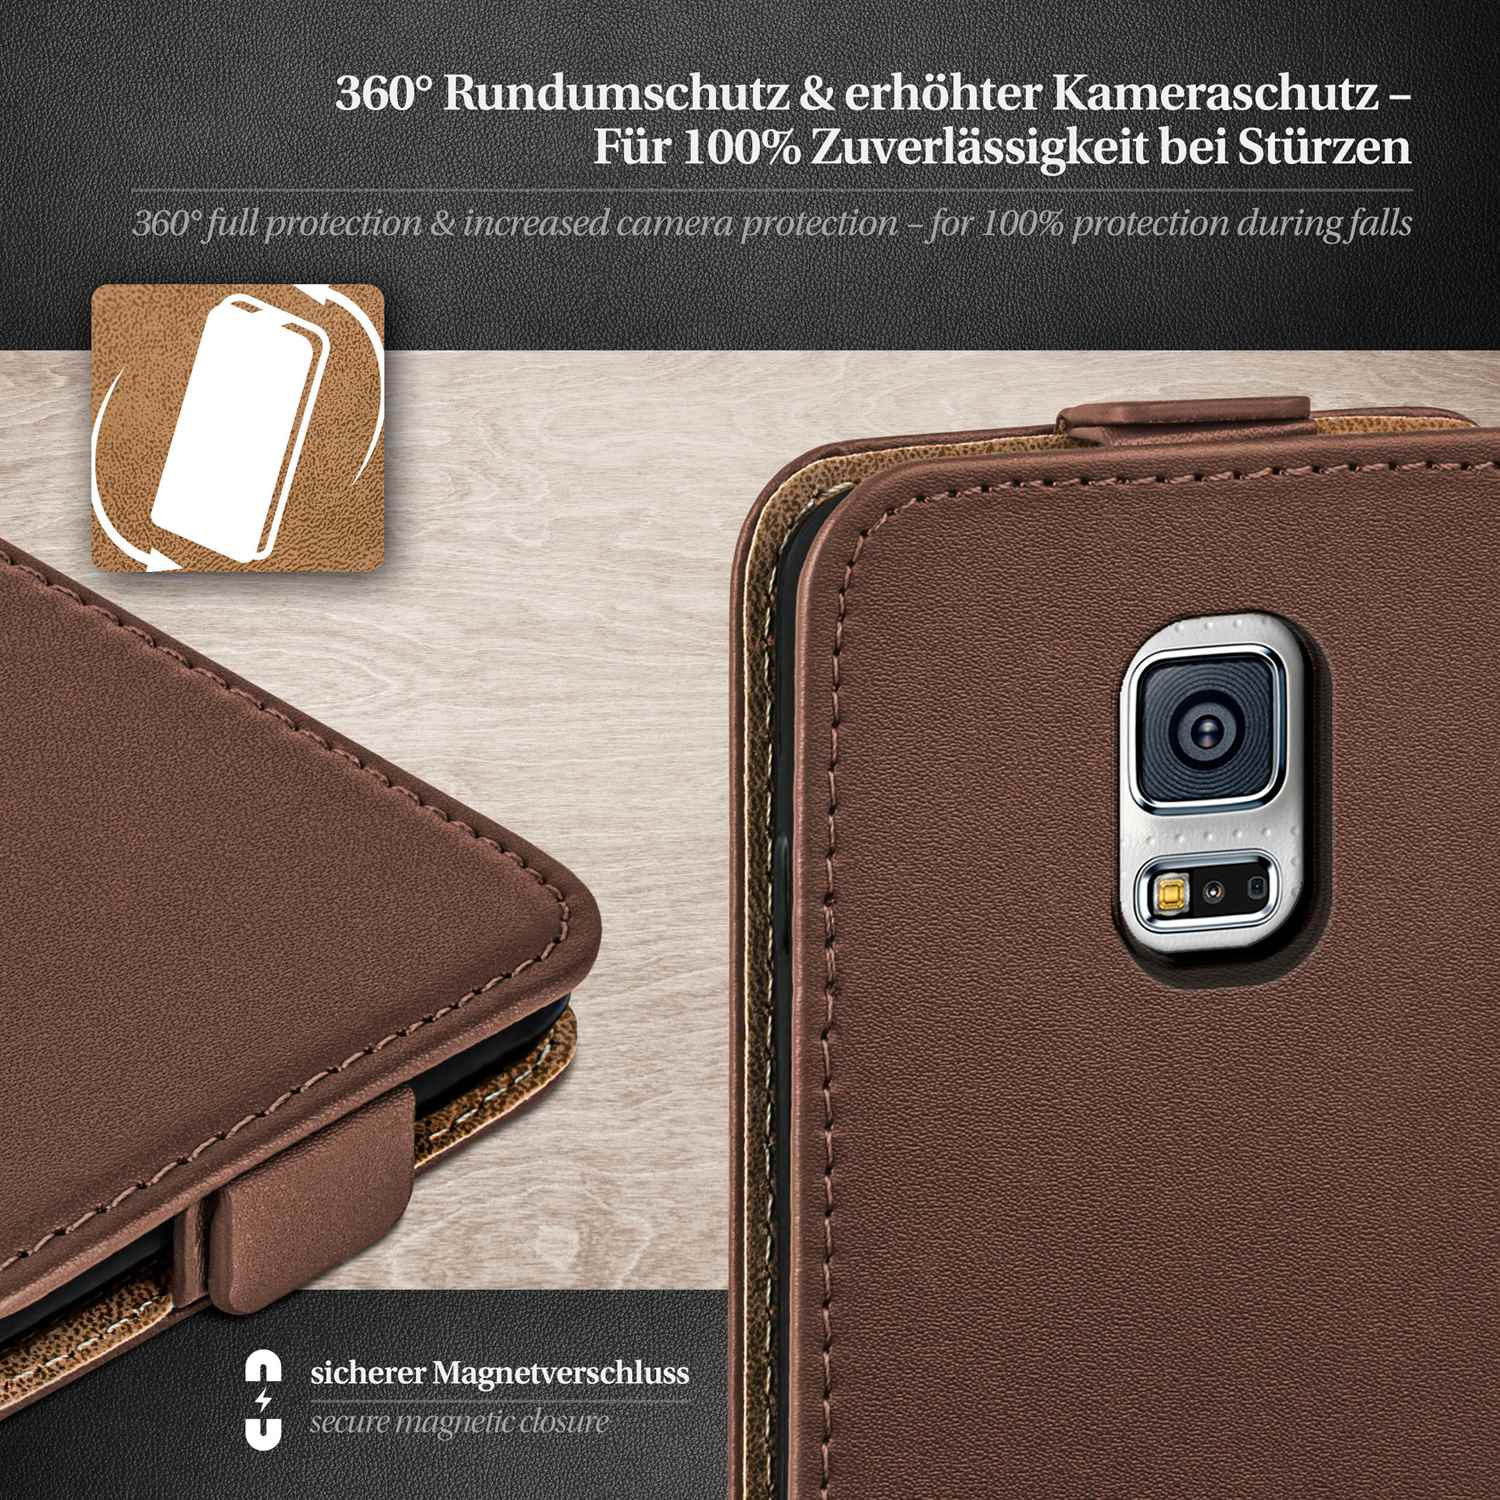 MOEX Flip Case, Flip Cover, Galaxy S5 Samsung, Oxide-Brown Mini